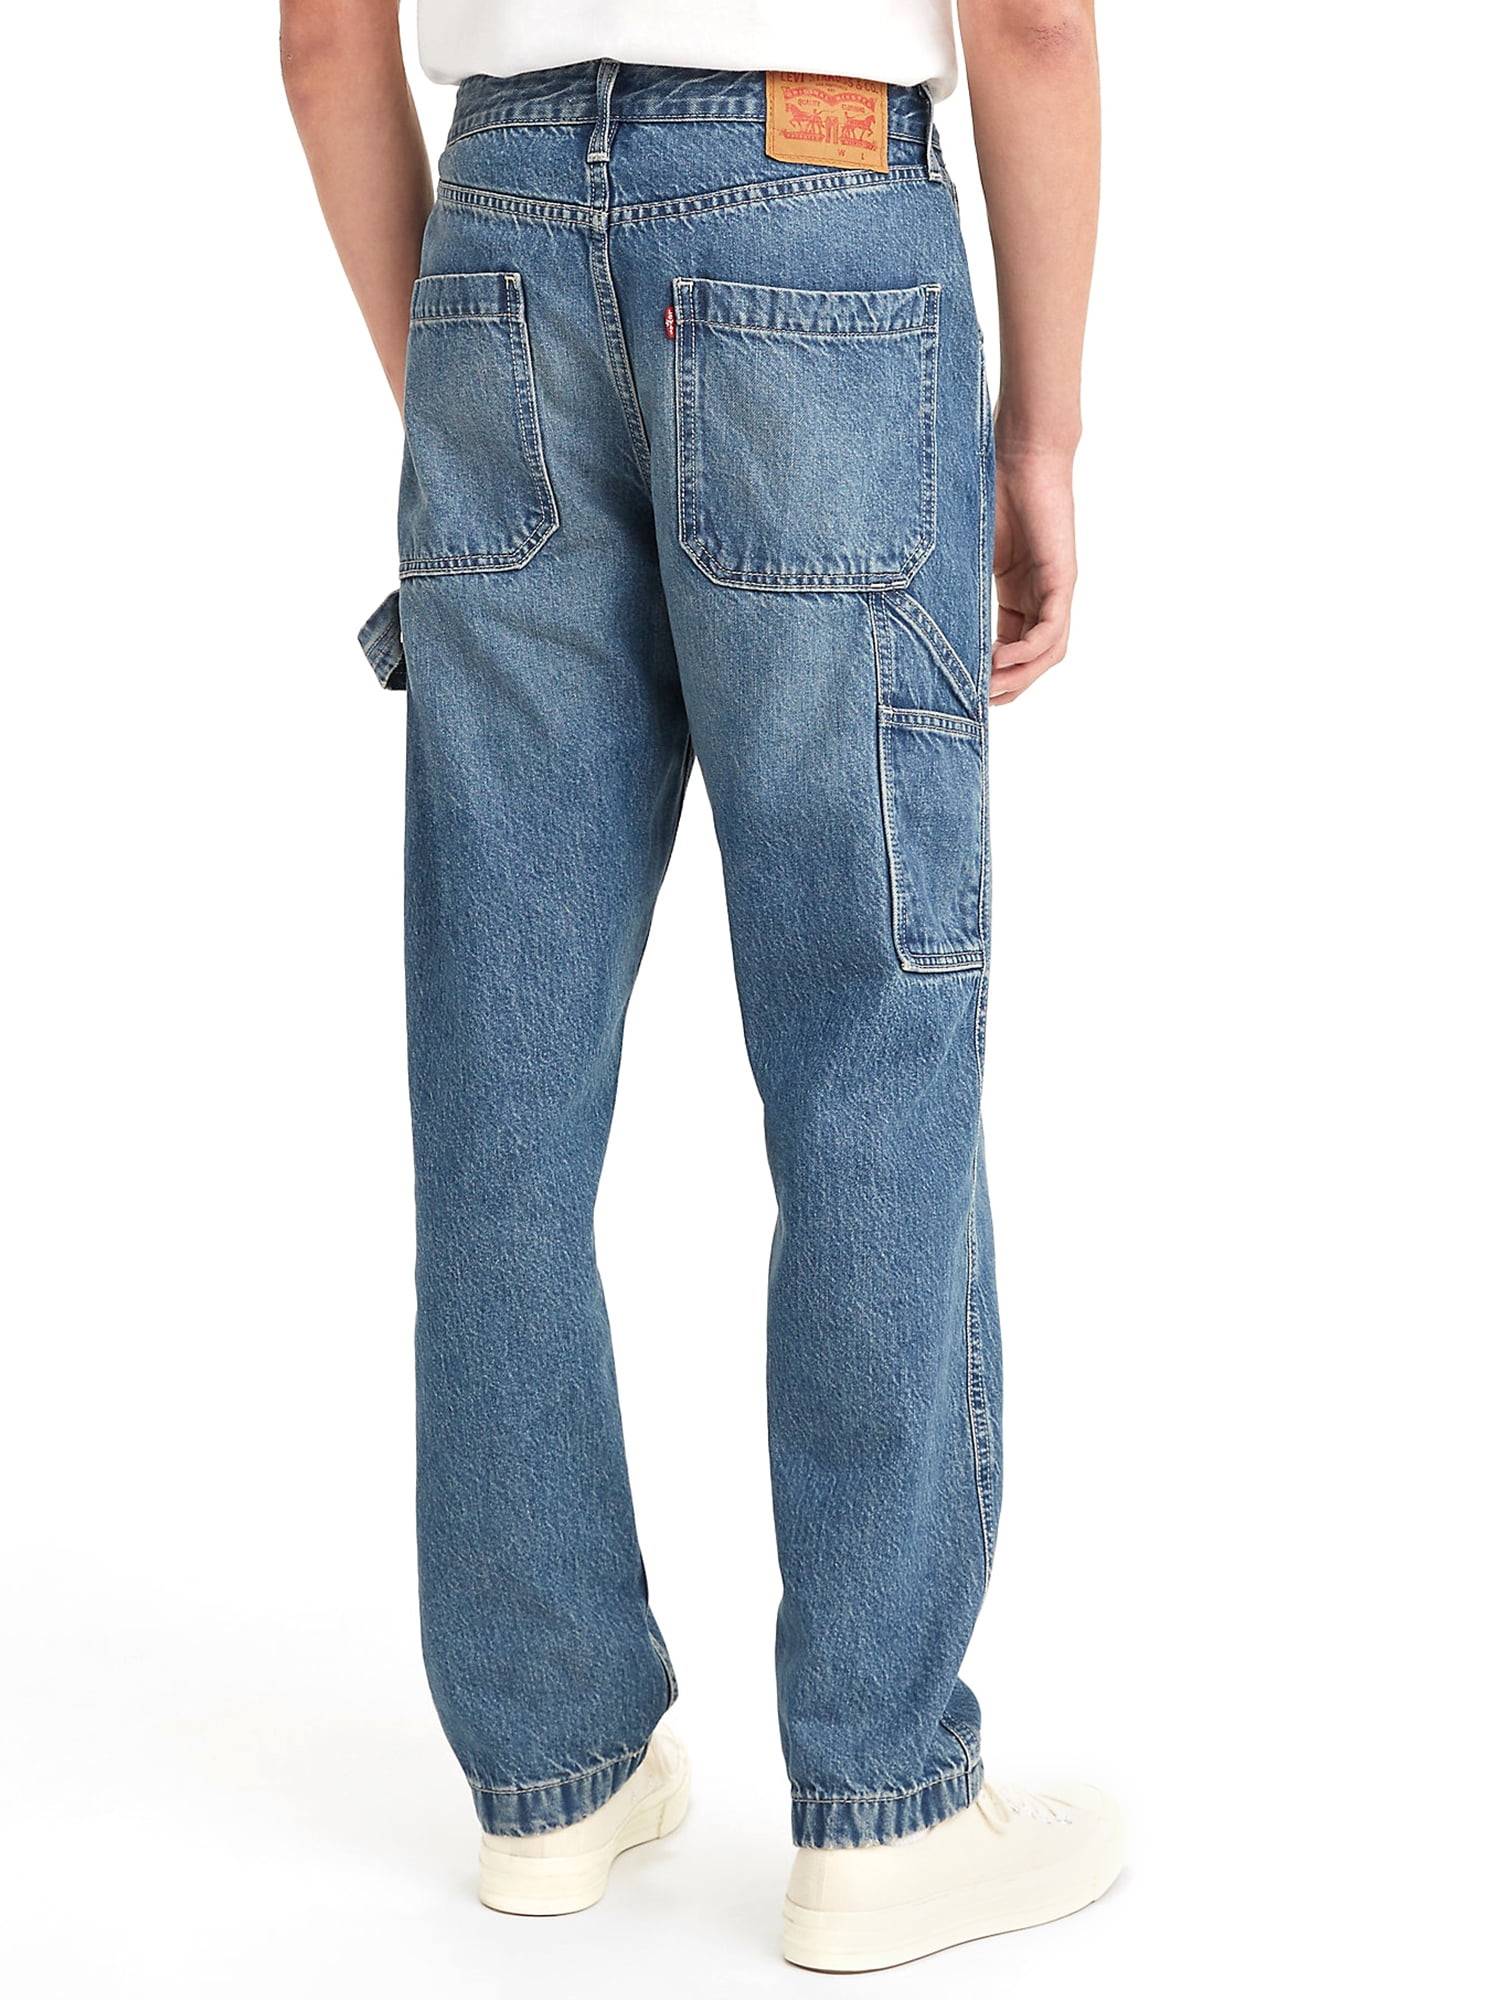 Introducir 81+ imagen levi’s tapered carpenter jeans